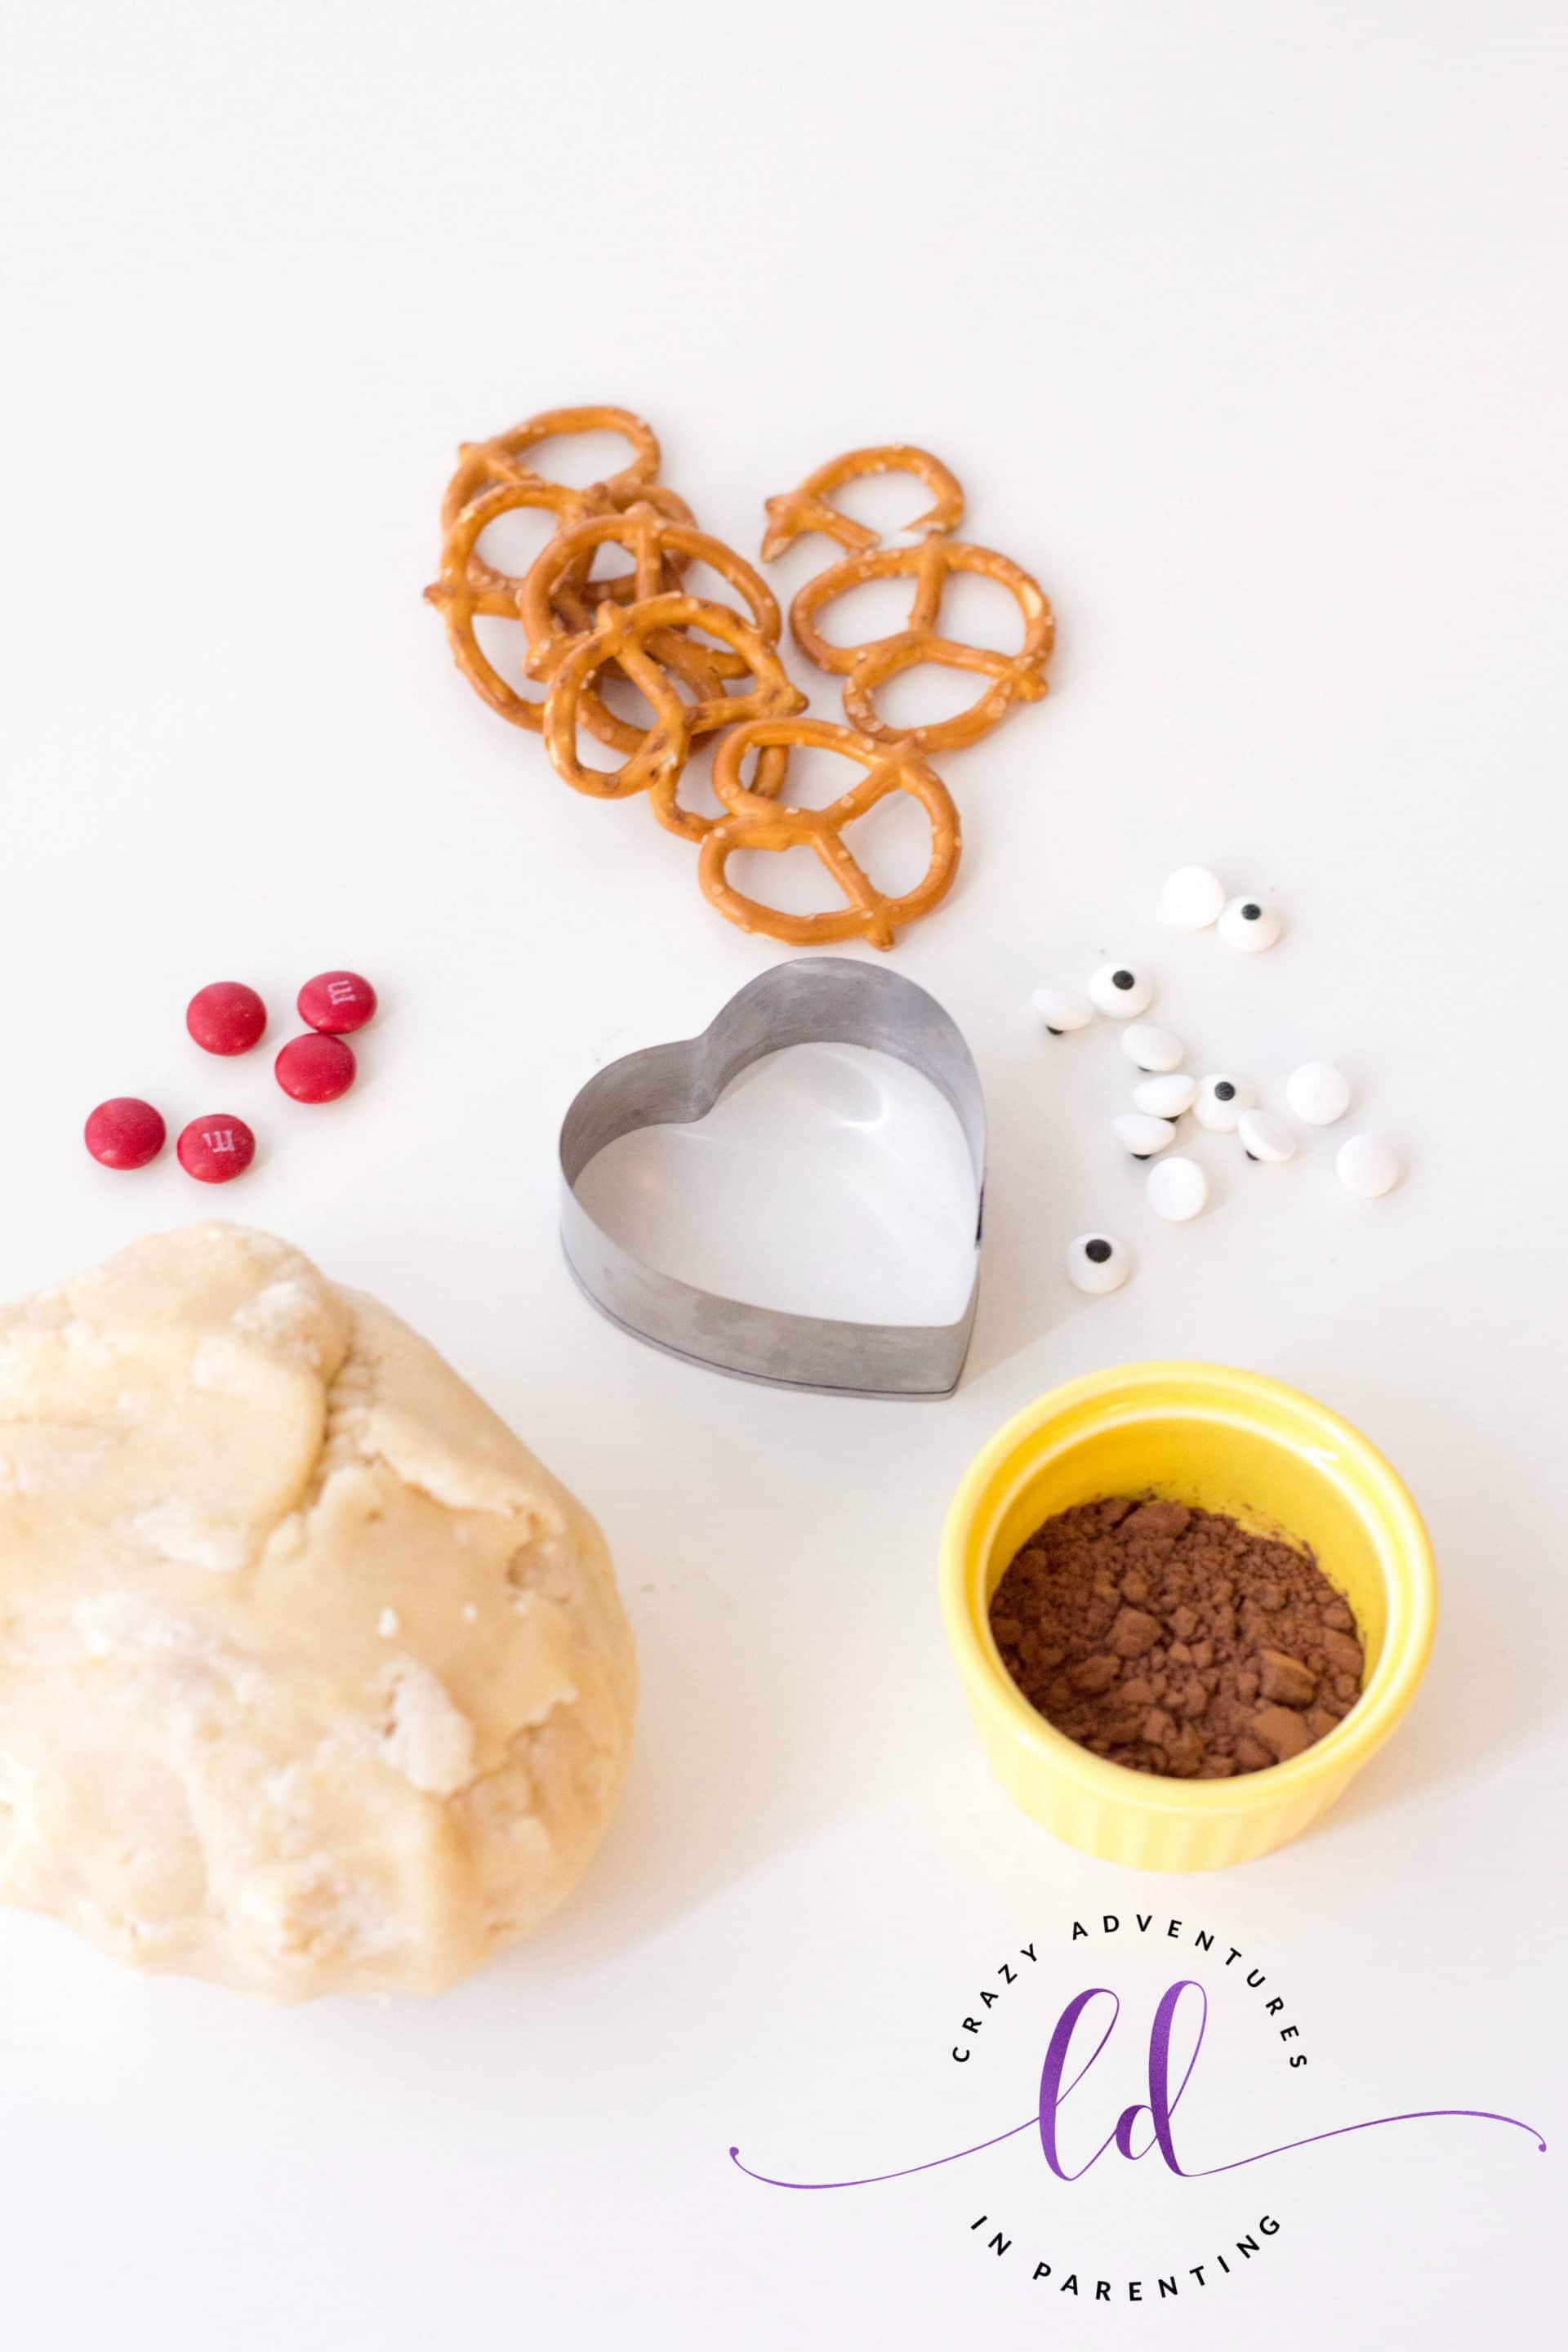 Ingredients to Make Rudolph Cookies